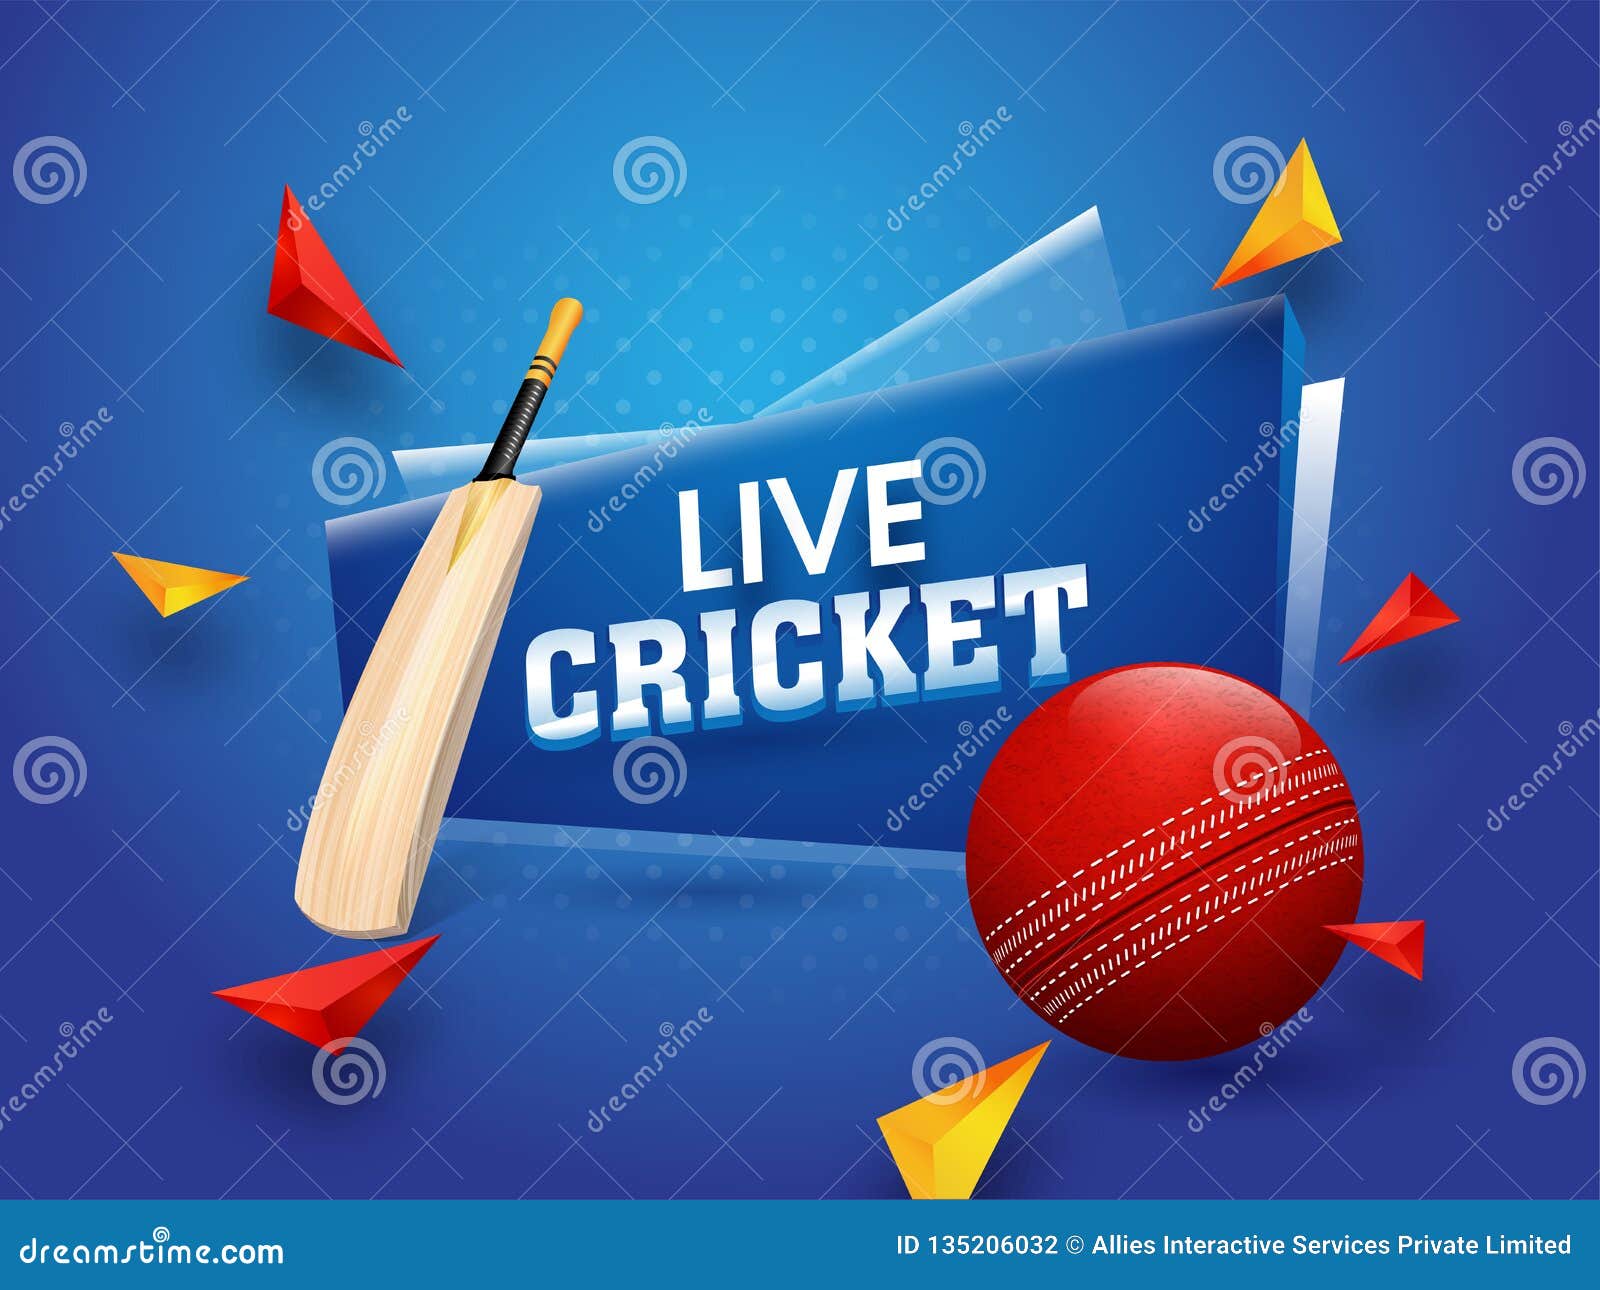 Live Cricket Tournament Poster or Banner Design